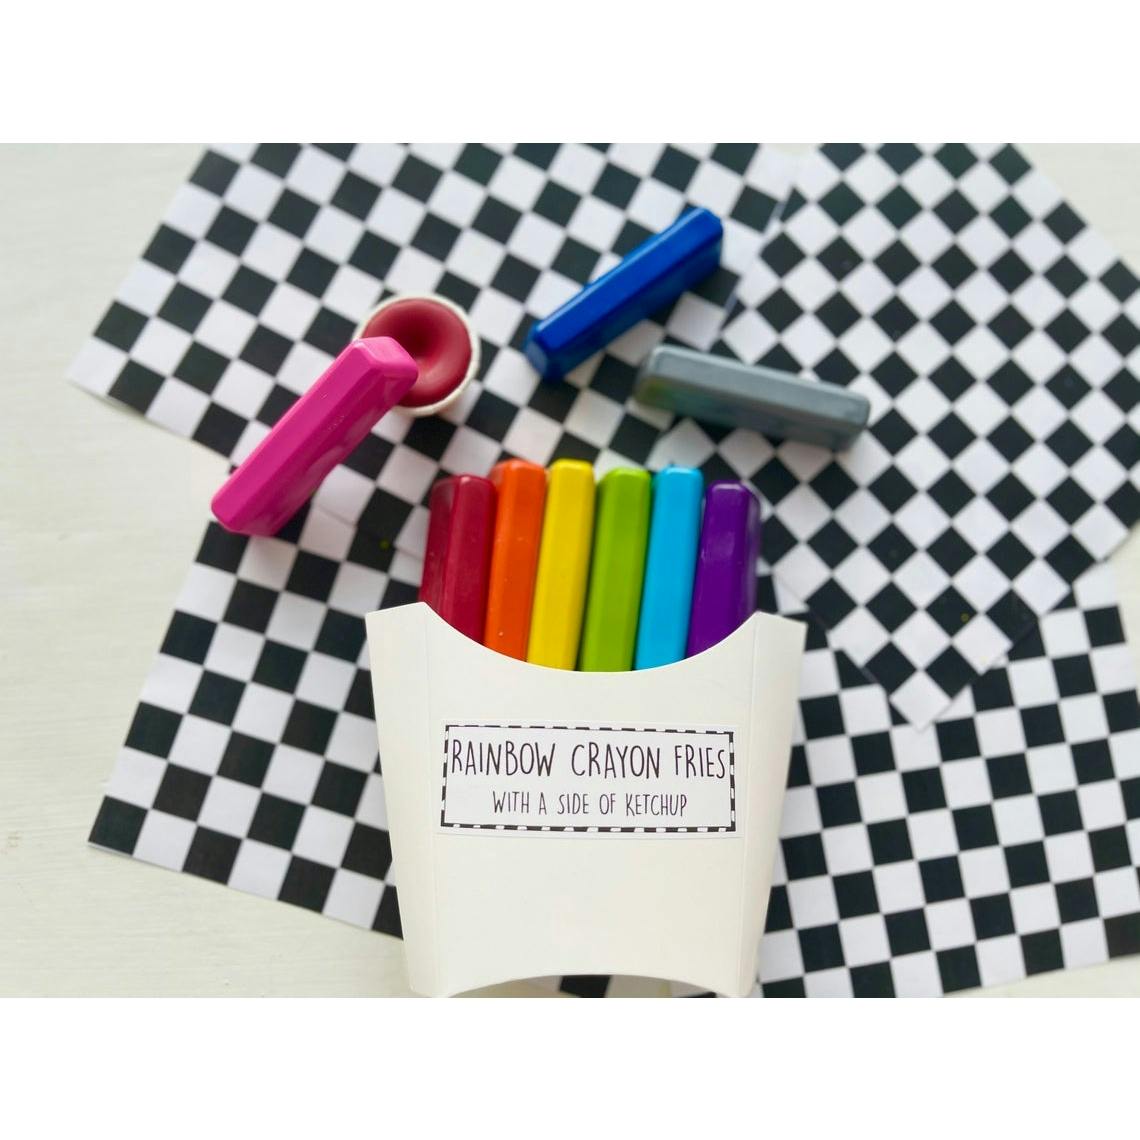 Rainbow Crayon Fries image 1